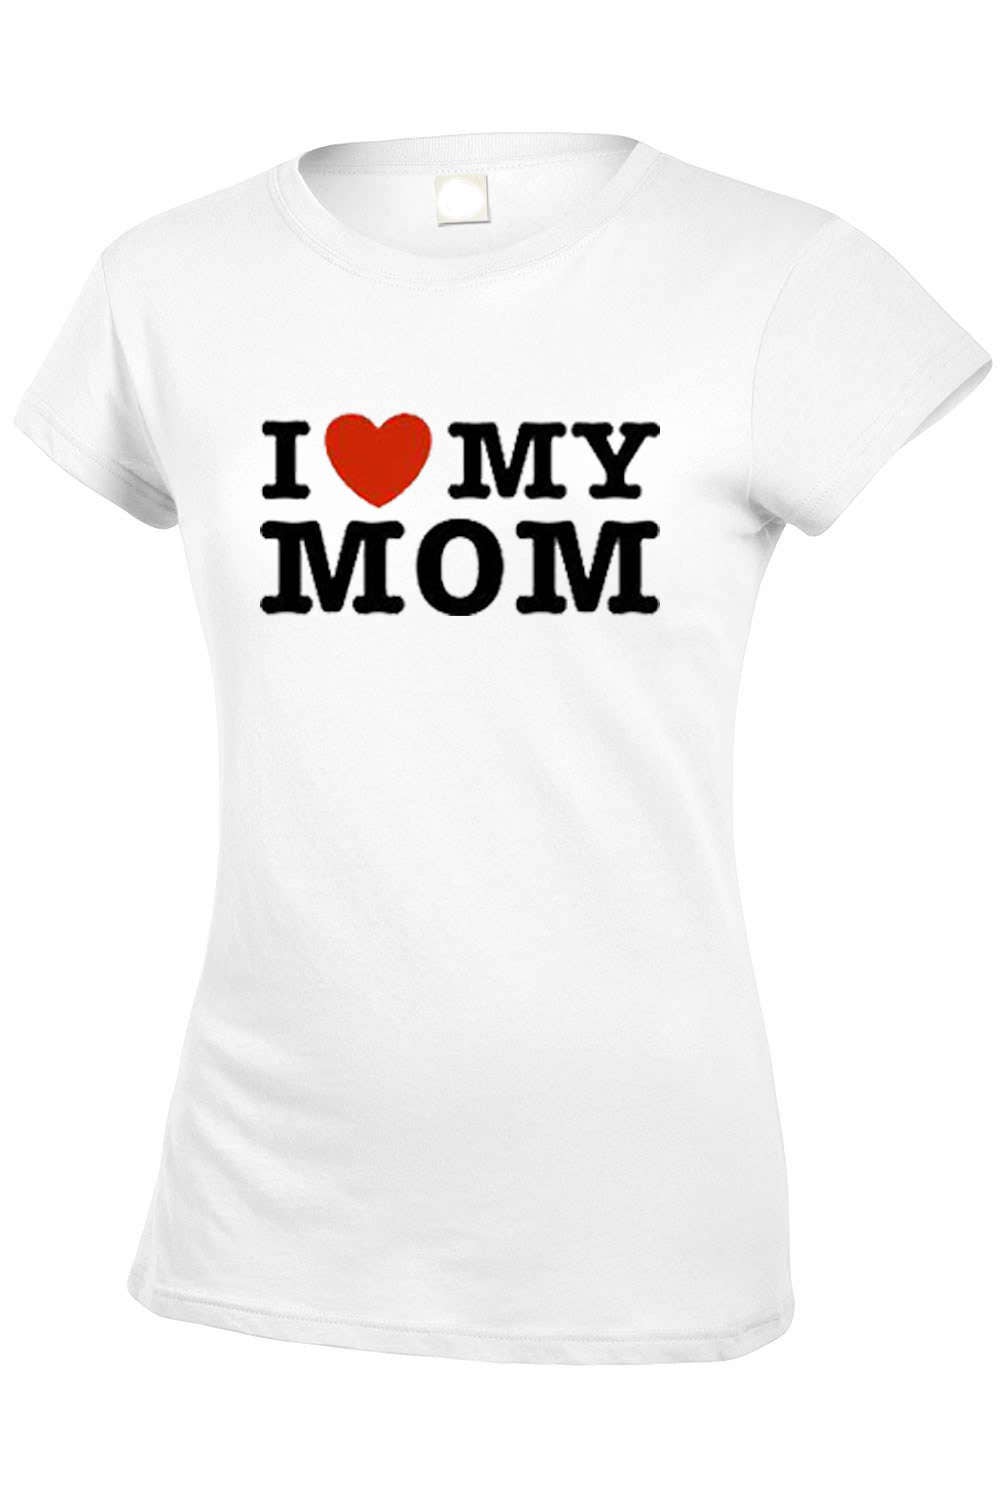 I Love My Mom T Shirt | Etsy